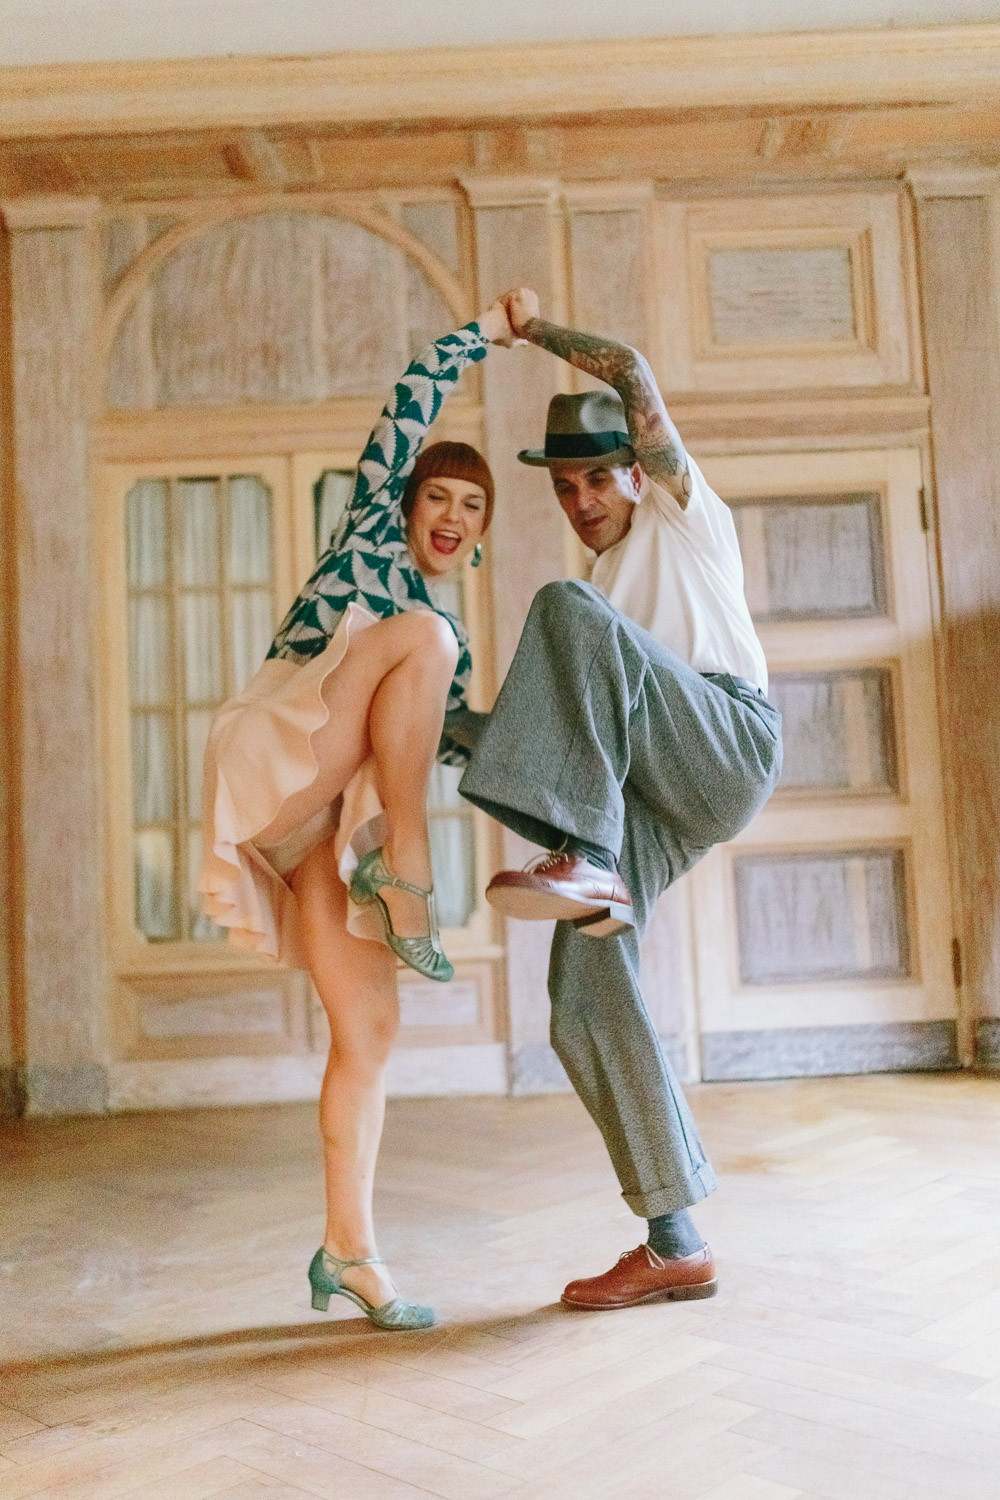  www.ebobrie.com/dancers-peter-katja 